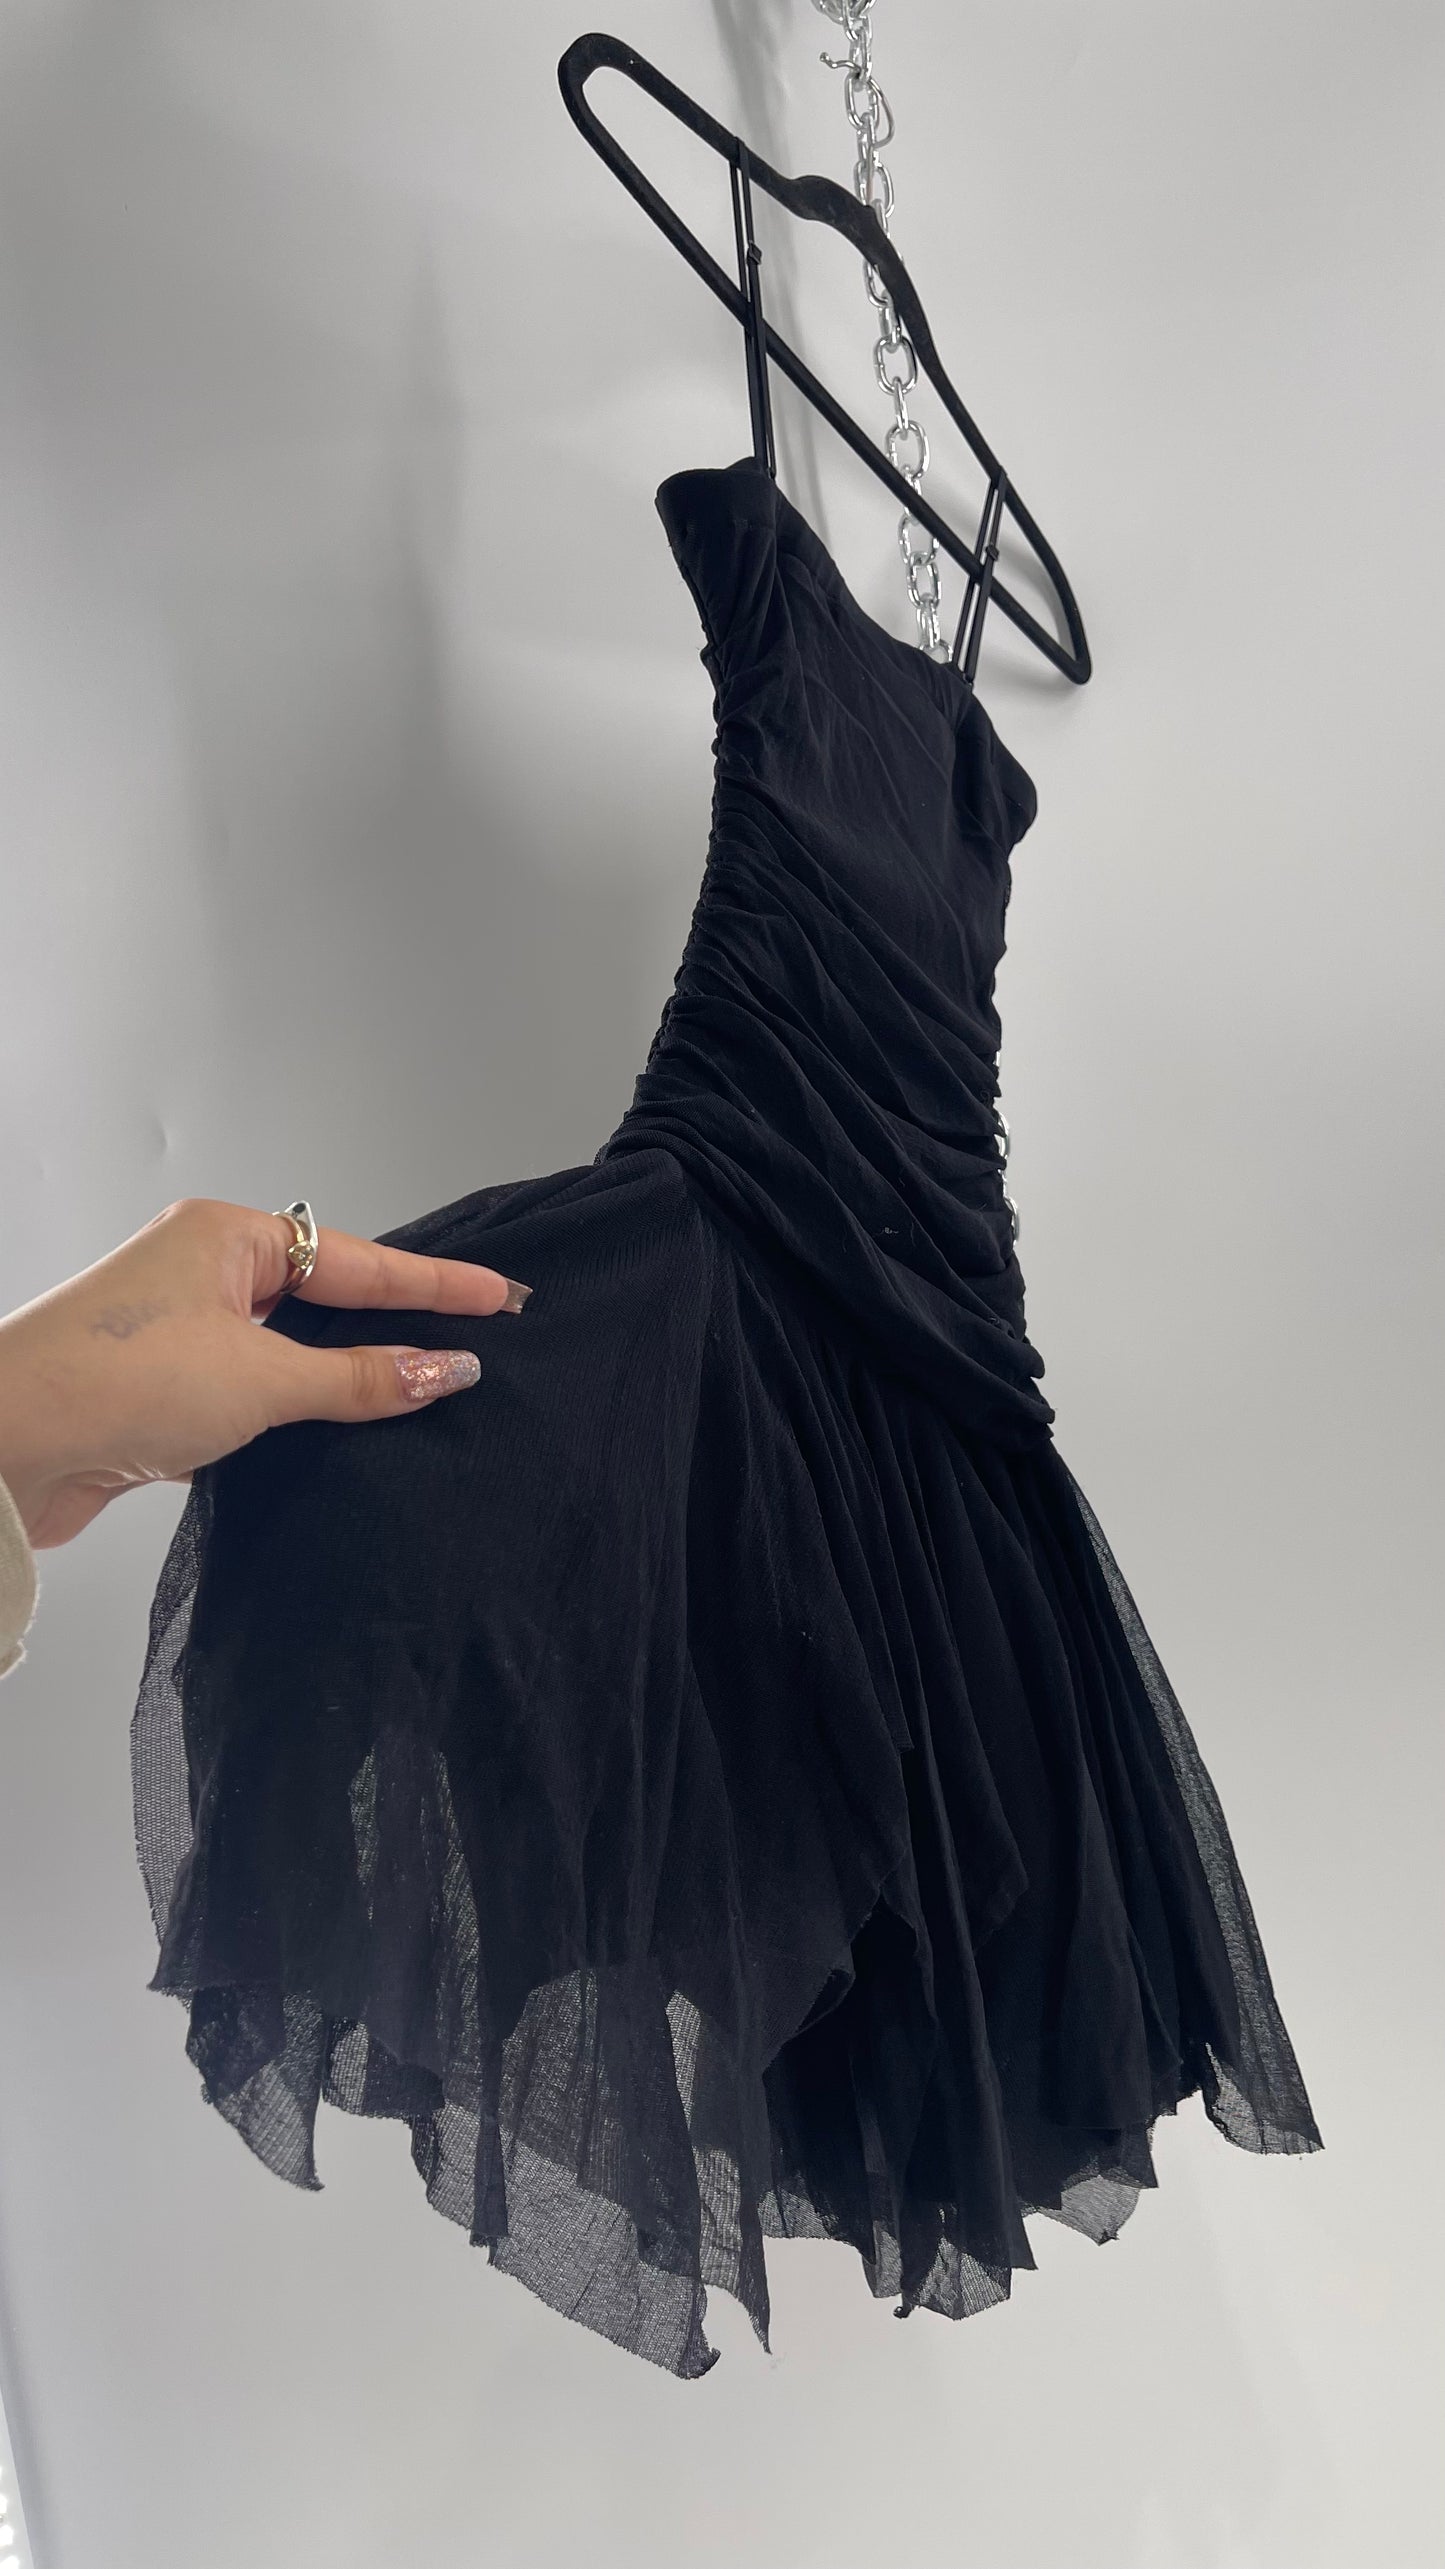 Um Deix Trois - Saks Fifth Avenue - Vintage -  Black Sleeveless Dress Ruched Bodice With Beaded Neckline ( Size 14 )